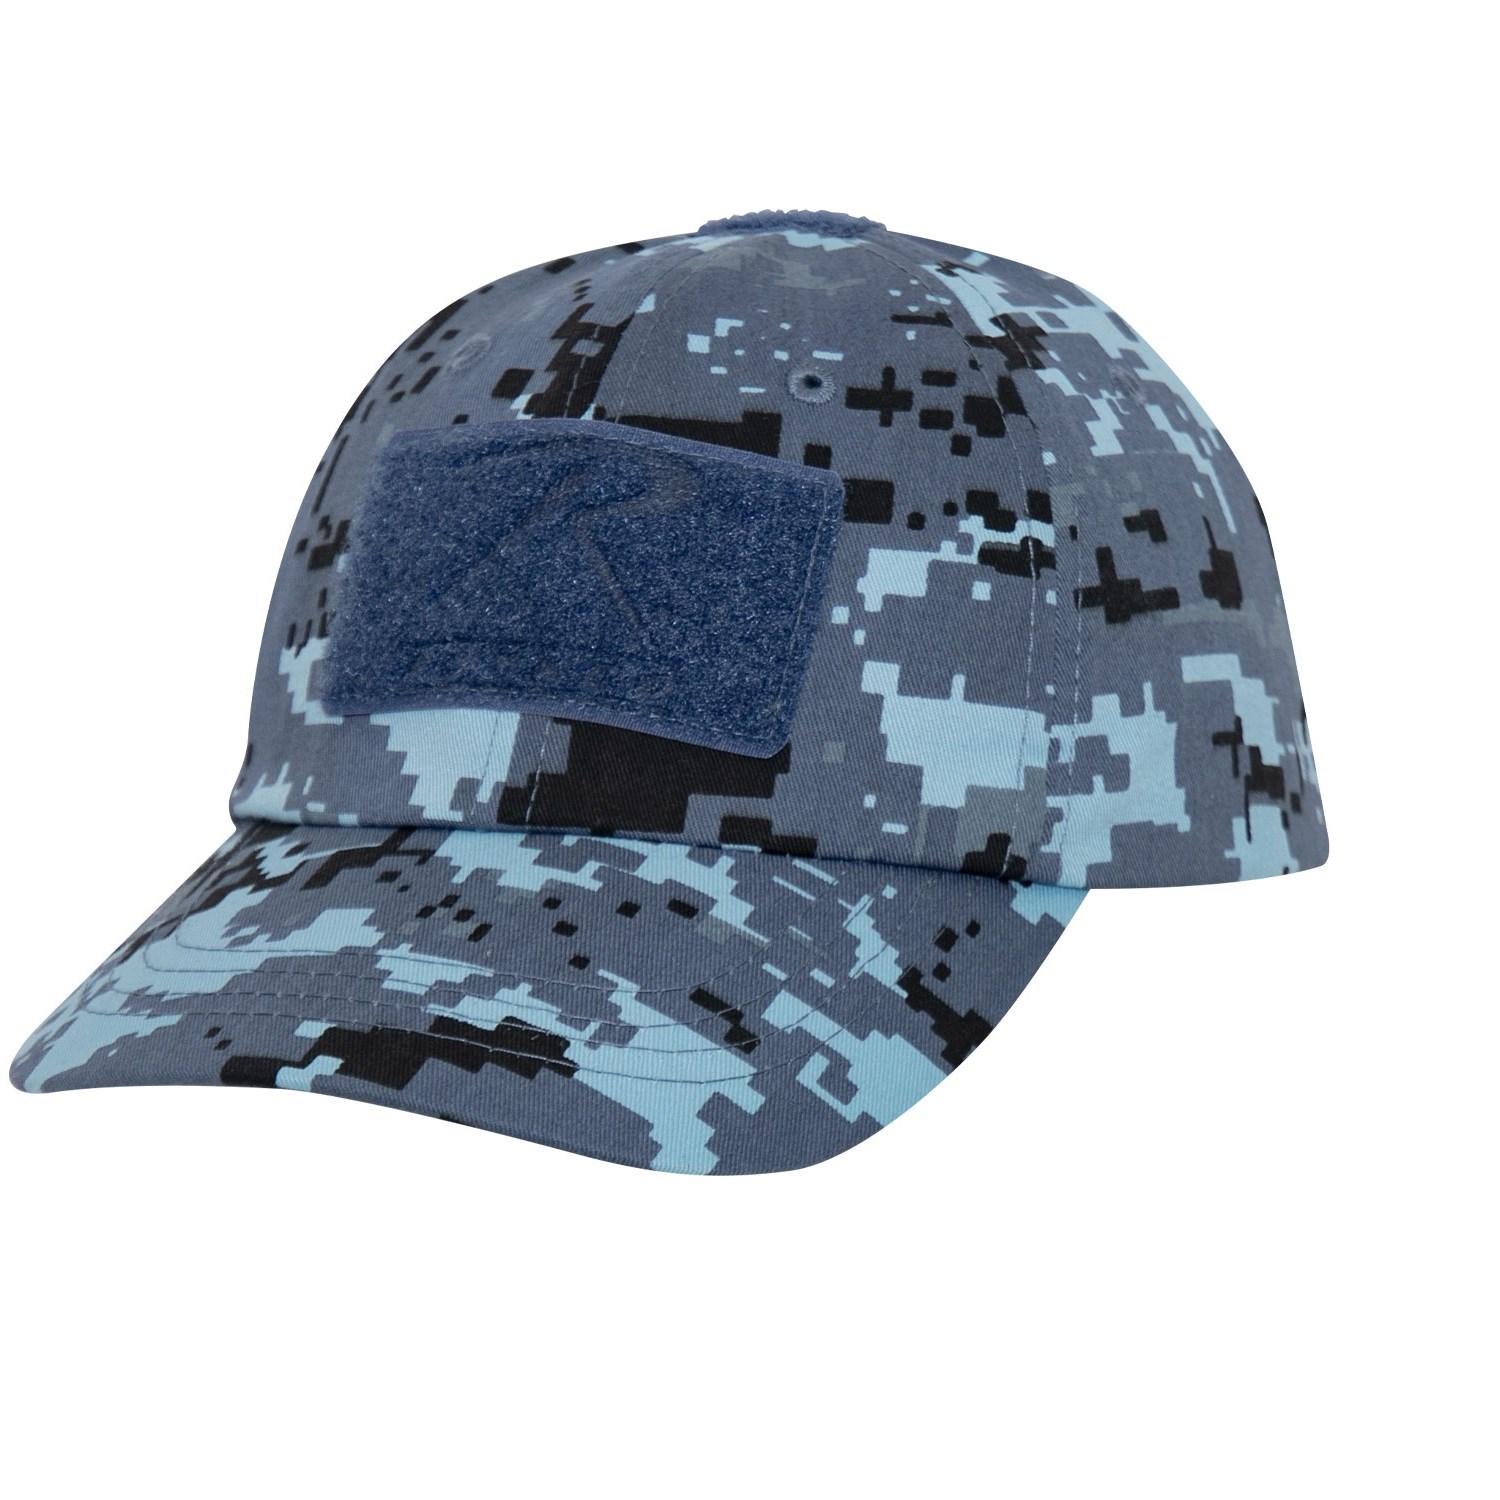 Come Take It Tactical Military Hat Baseball ACU DIGITAL CAMO Cap